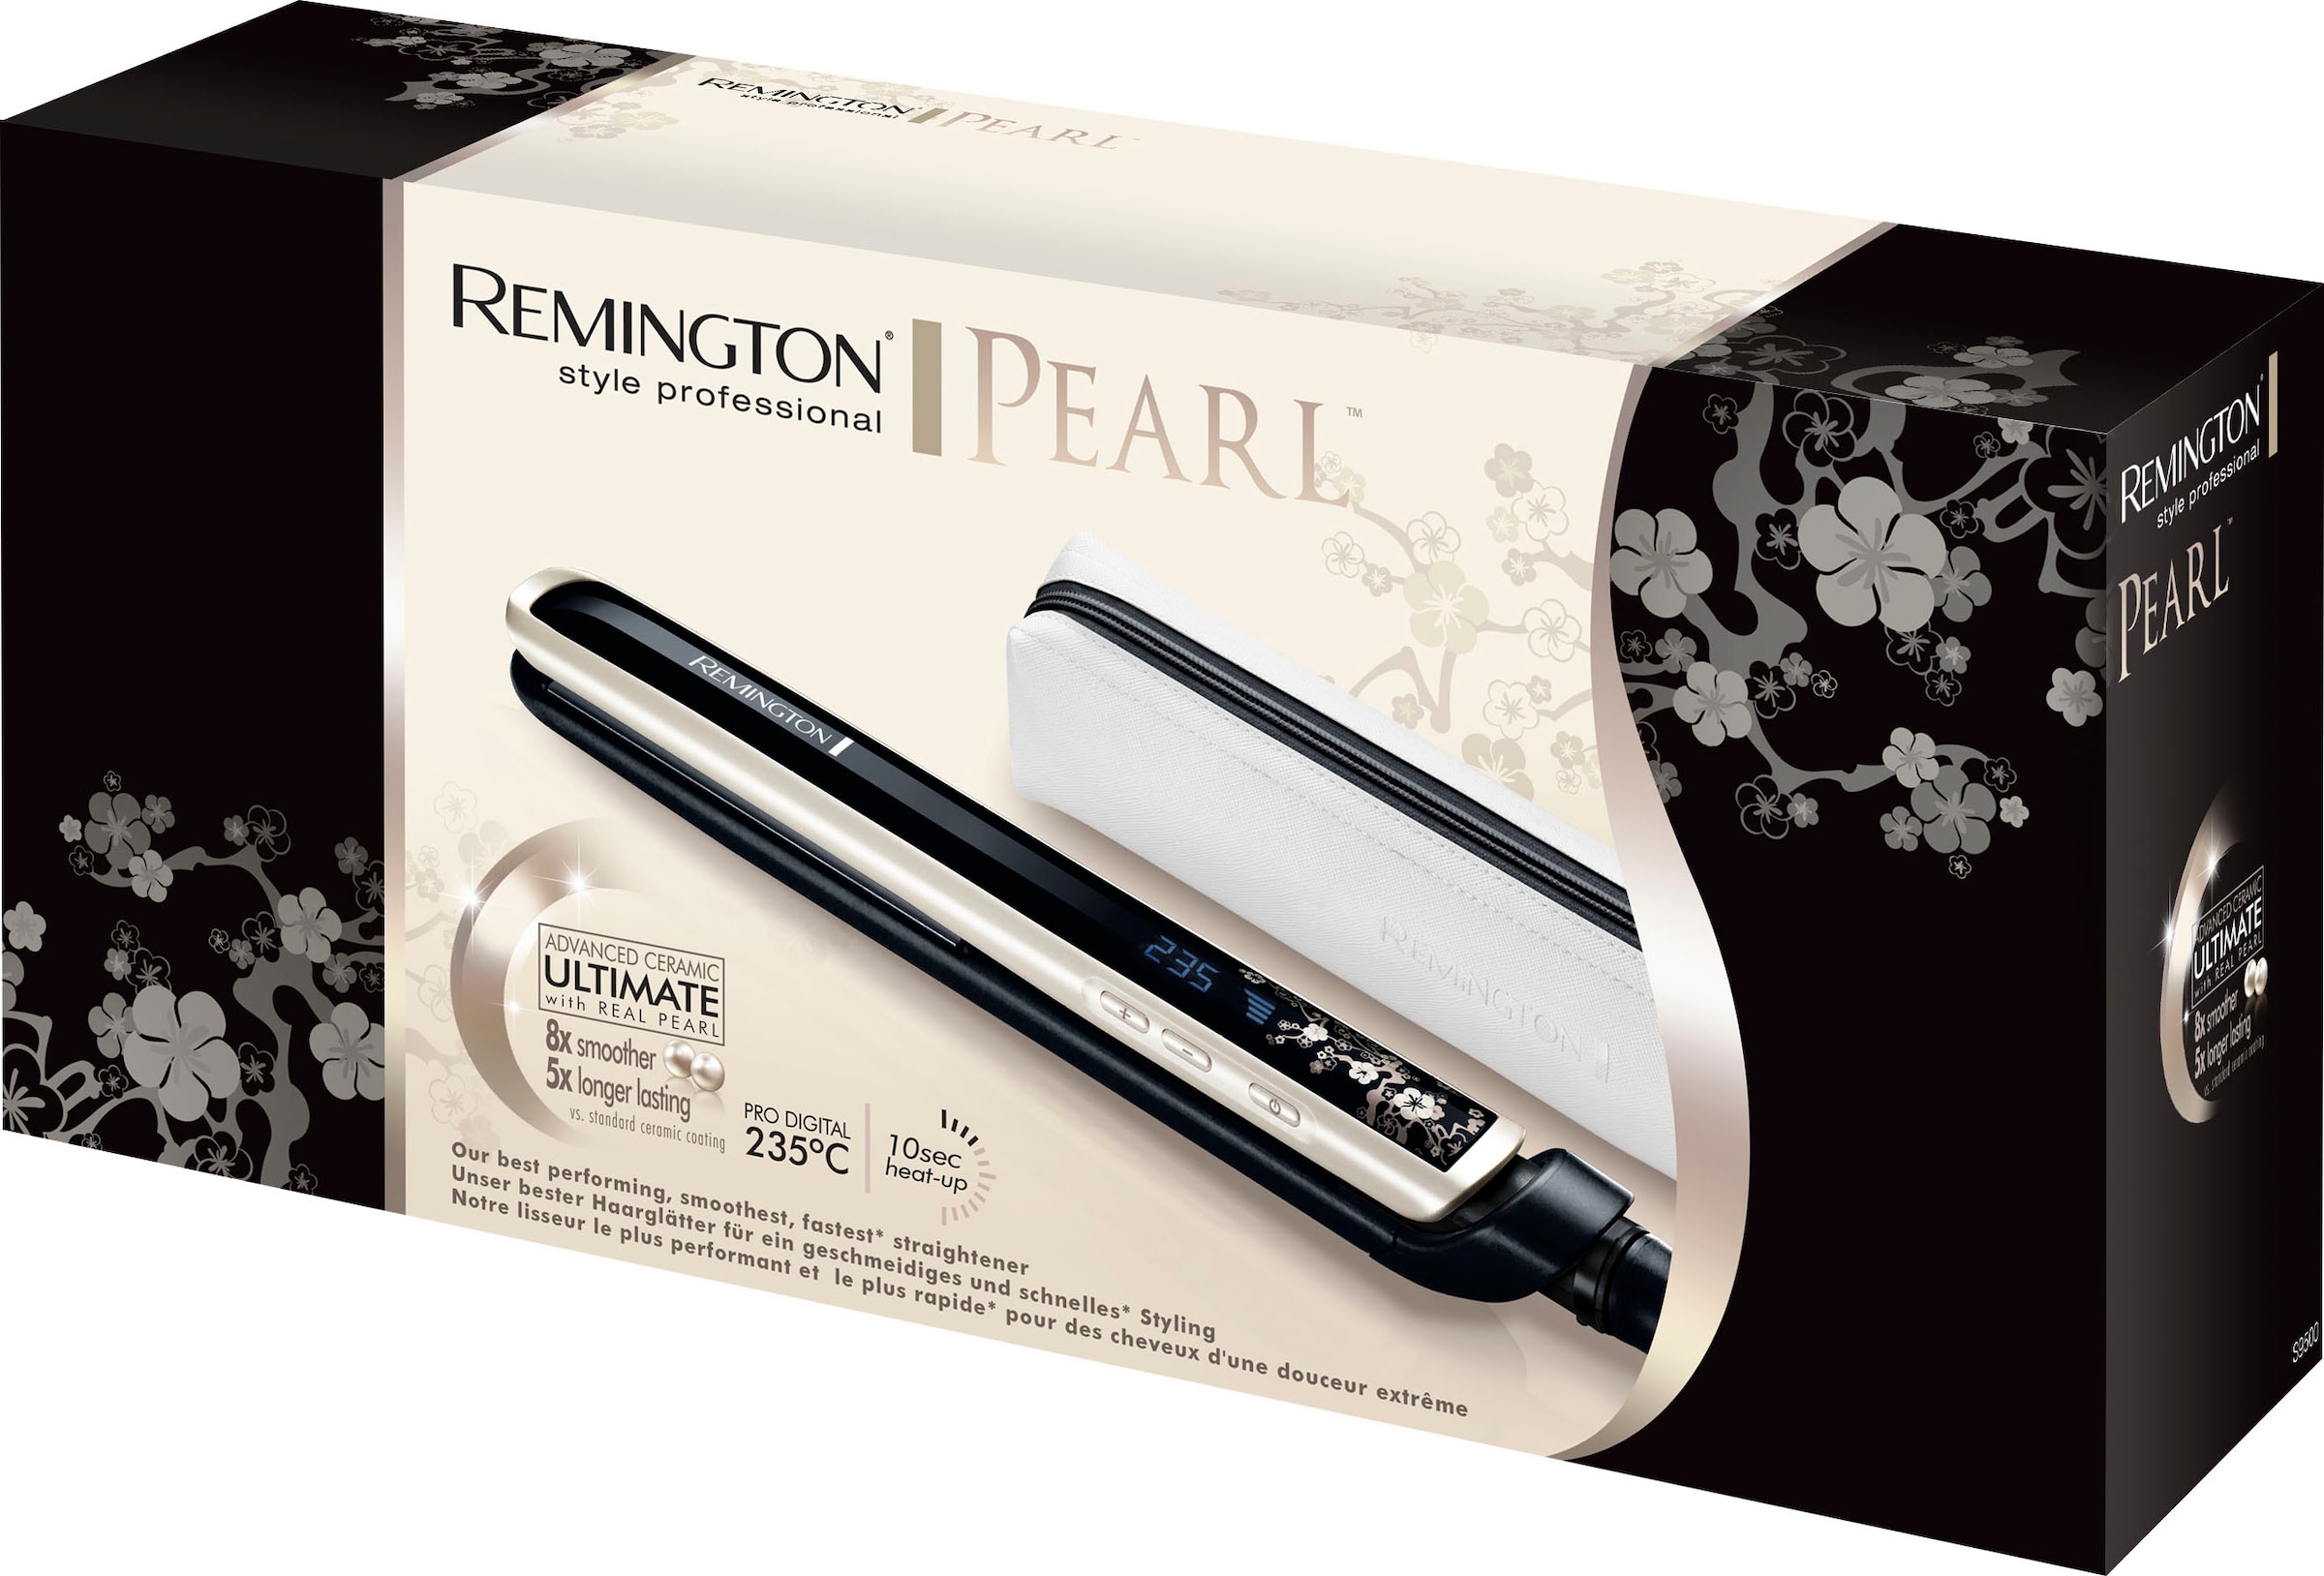 Remington Glätteisen »Pearl S9500«, Keramik, Keramikbeschichtung mit echten Perlen, 10 Sek. Aufheizzeit